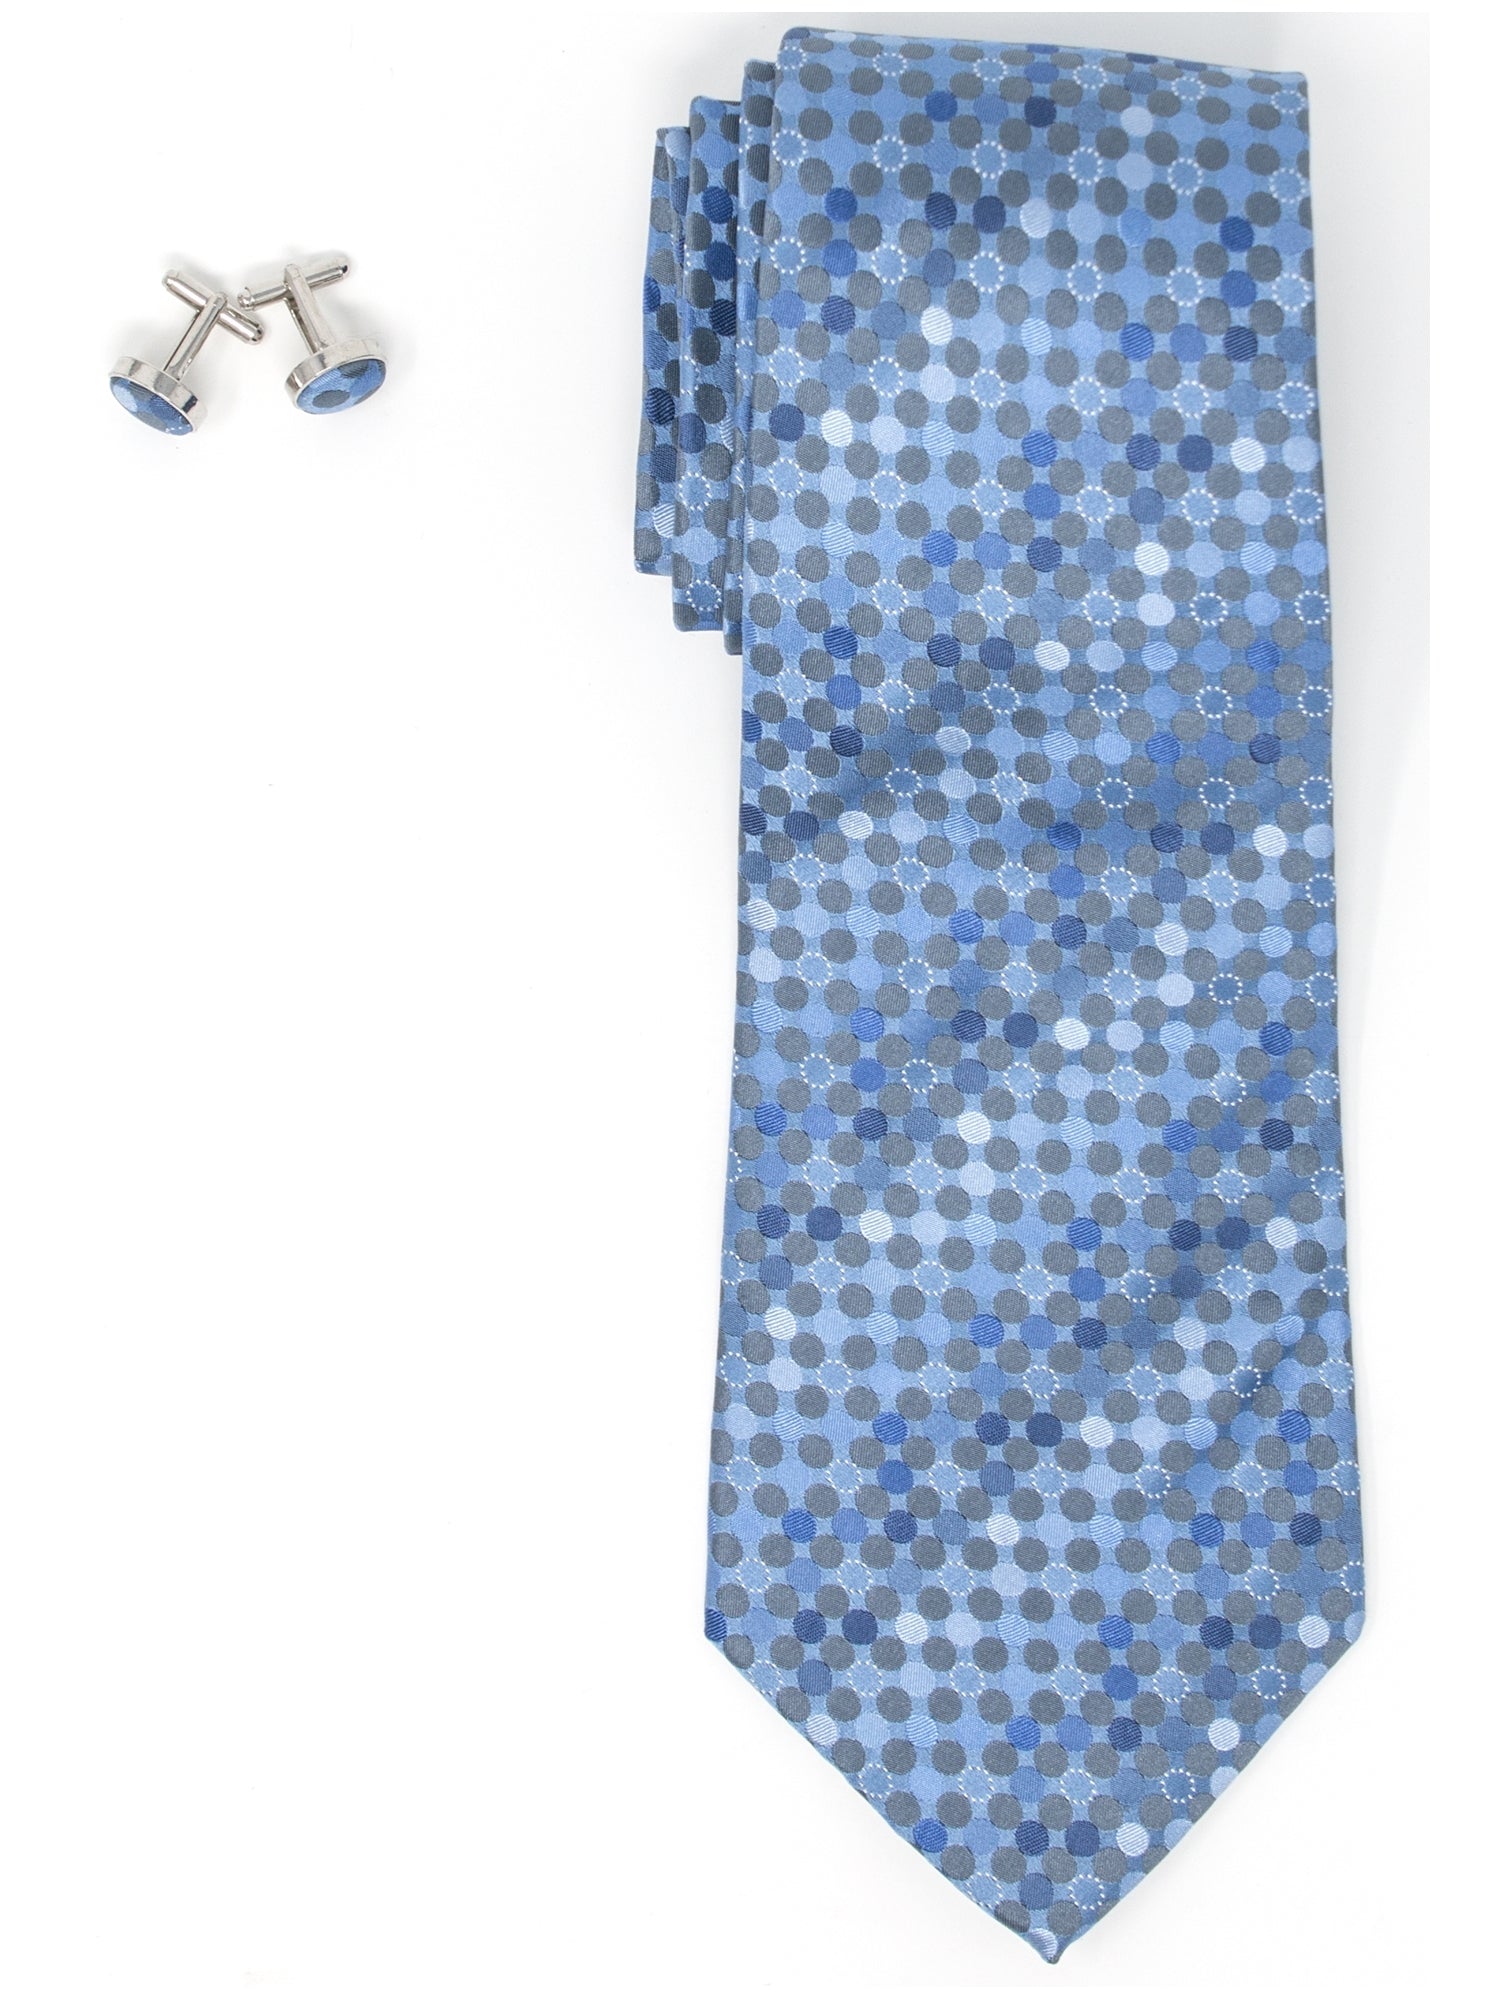 Men's Silk Neck Tie Set Cufflinks & Hanky Collection Neck Tie TheDapperTie Blue And Grey Polka Dots Regular 